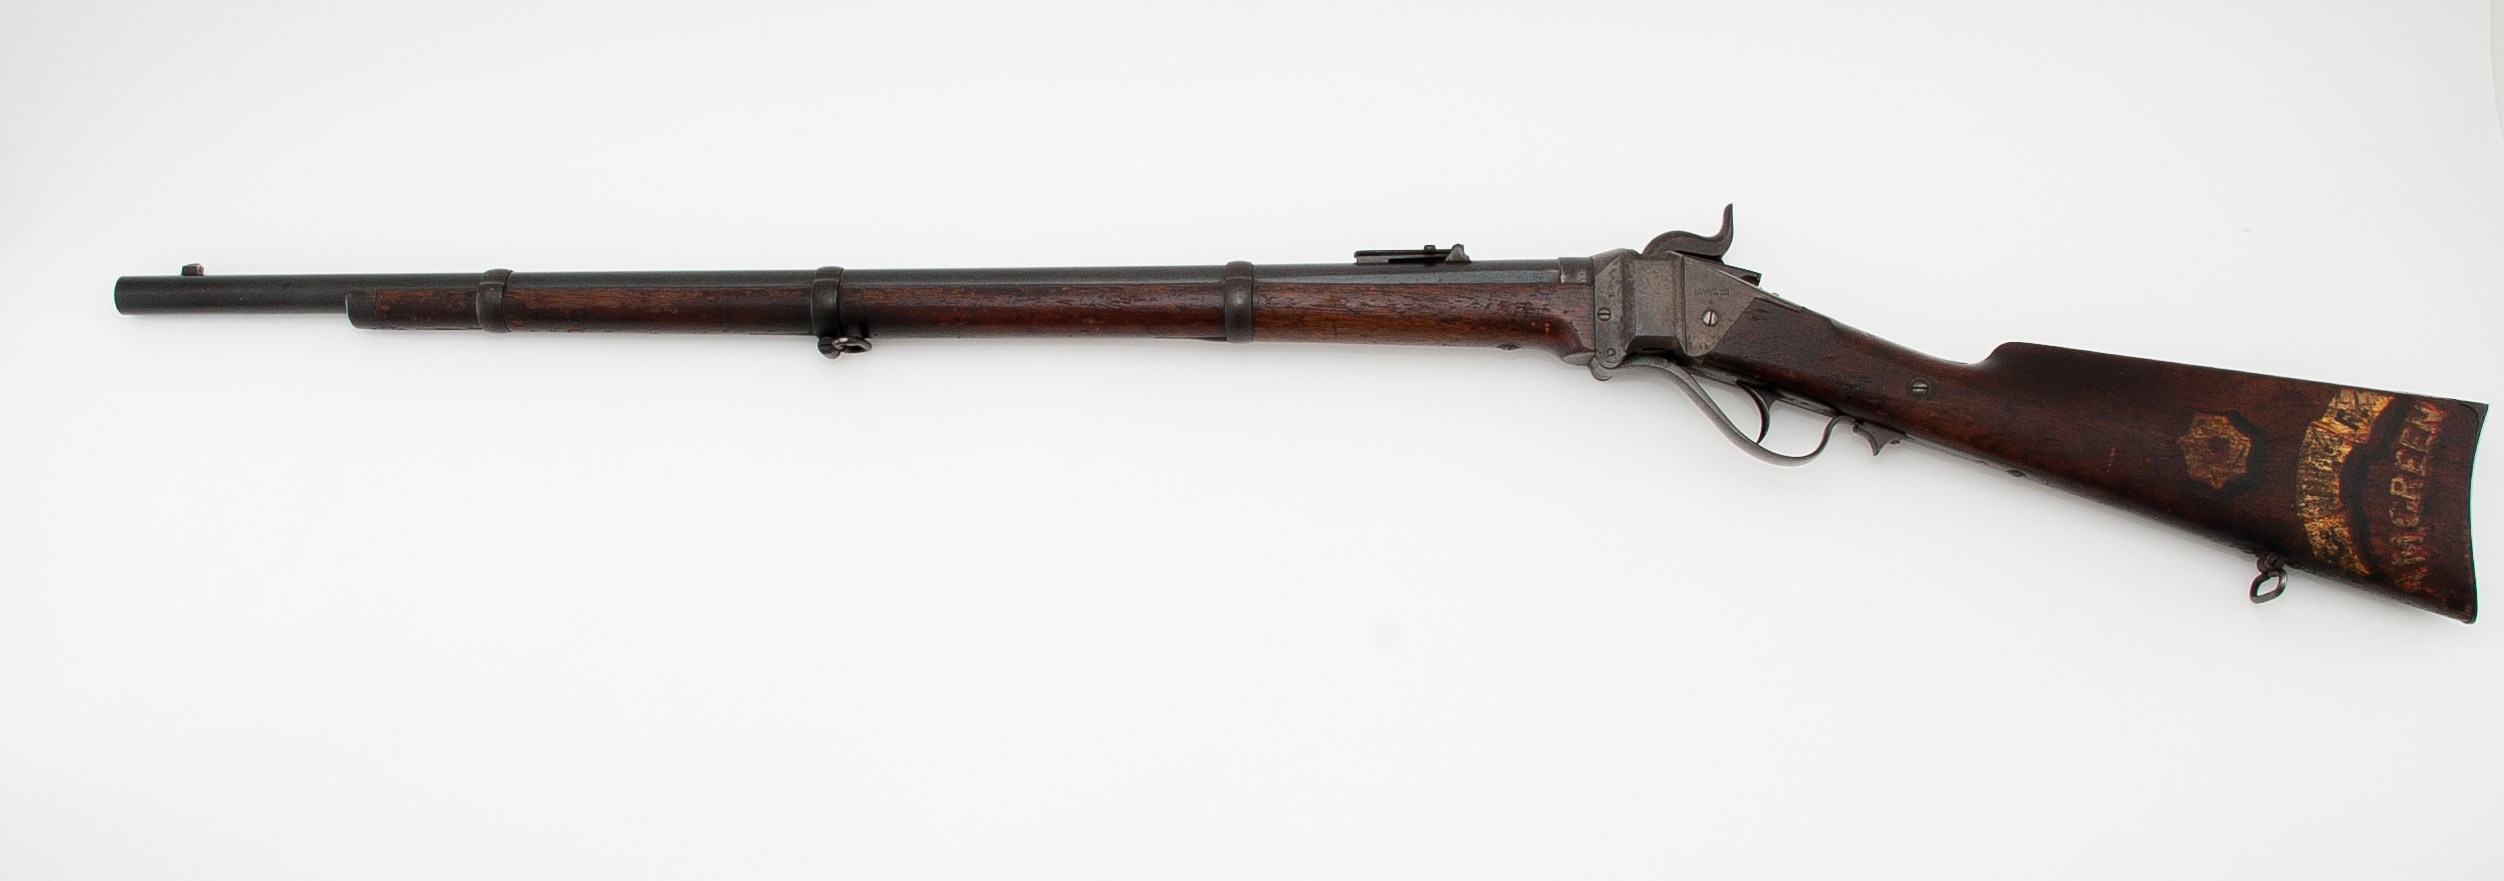 Sharps 1863 Rifle #22